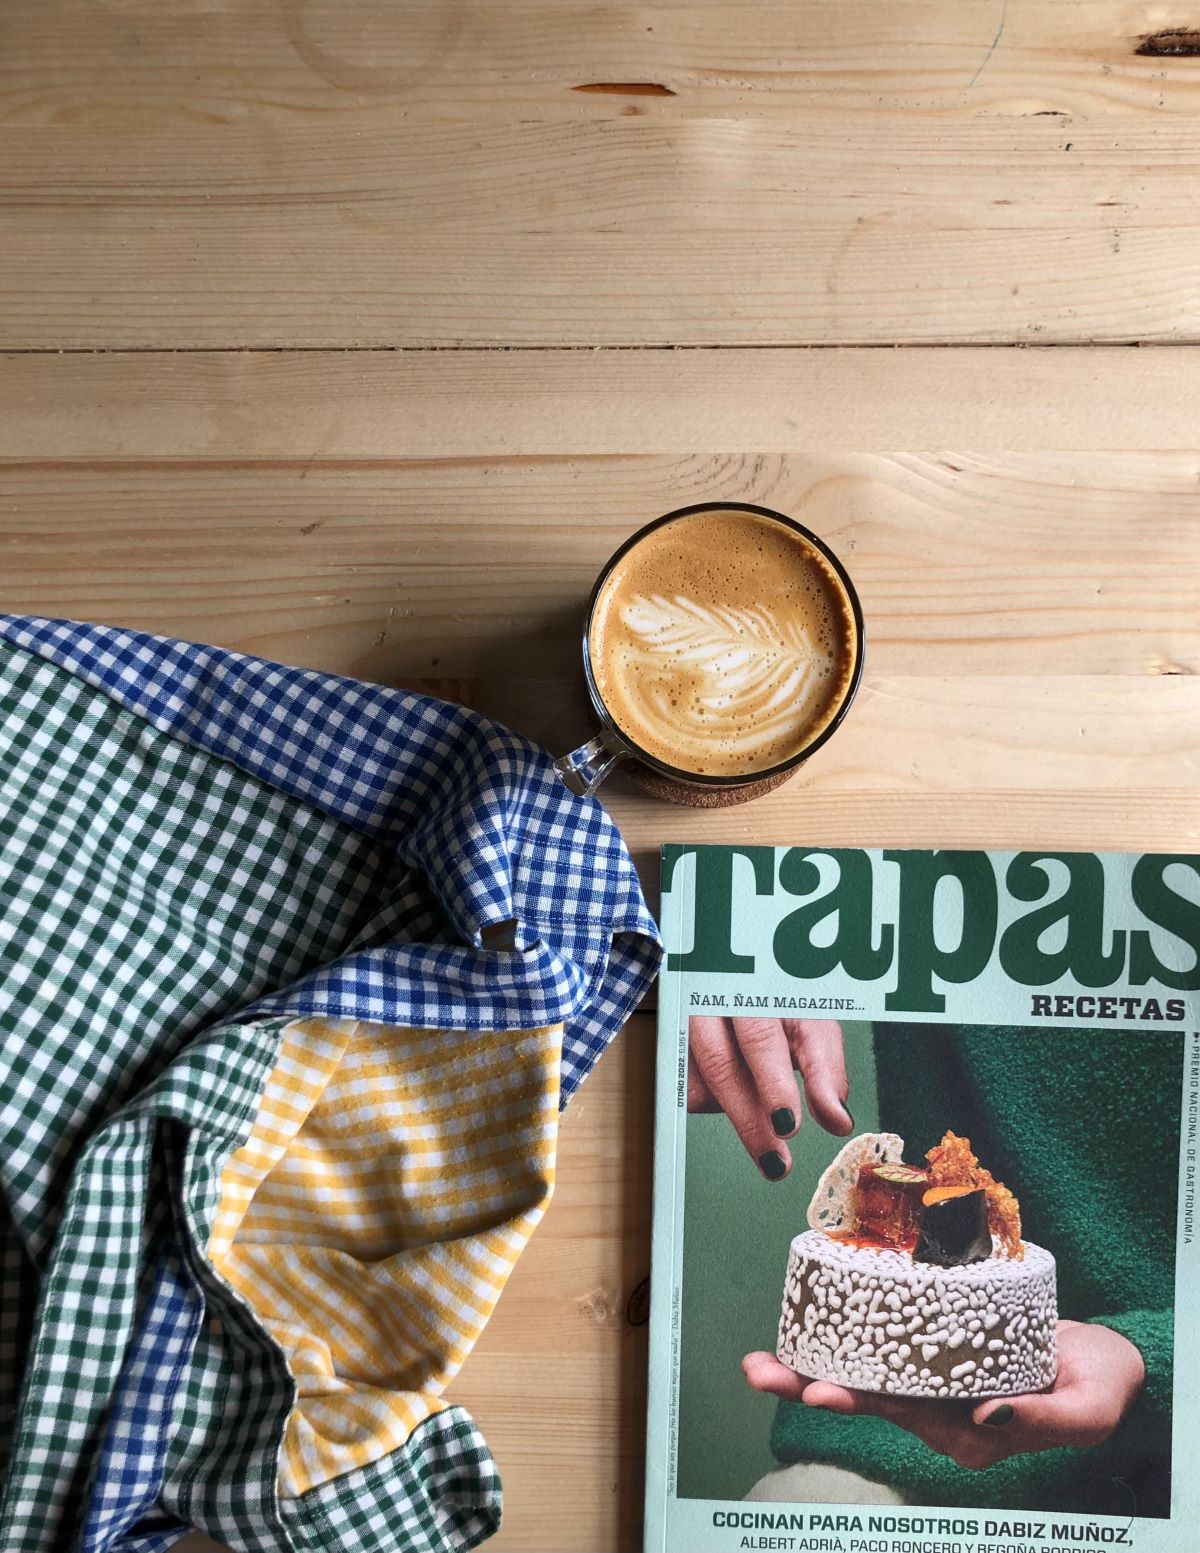 coffee with Tapas magazine